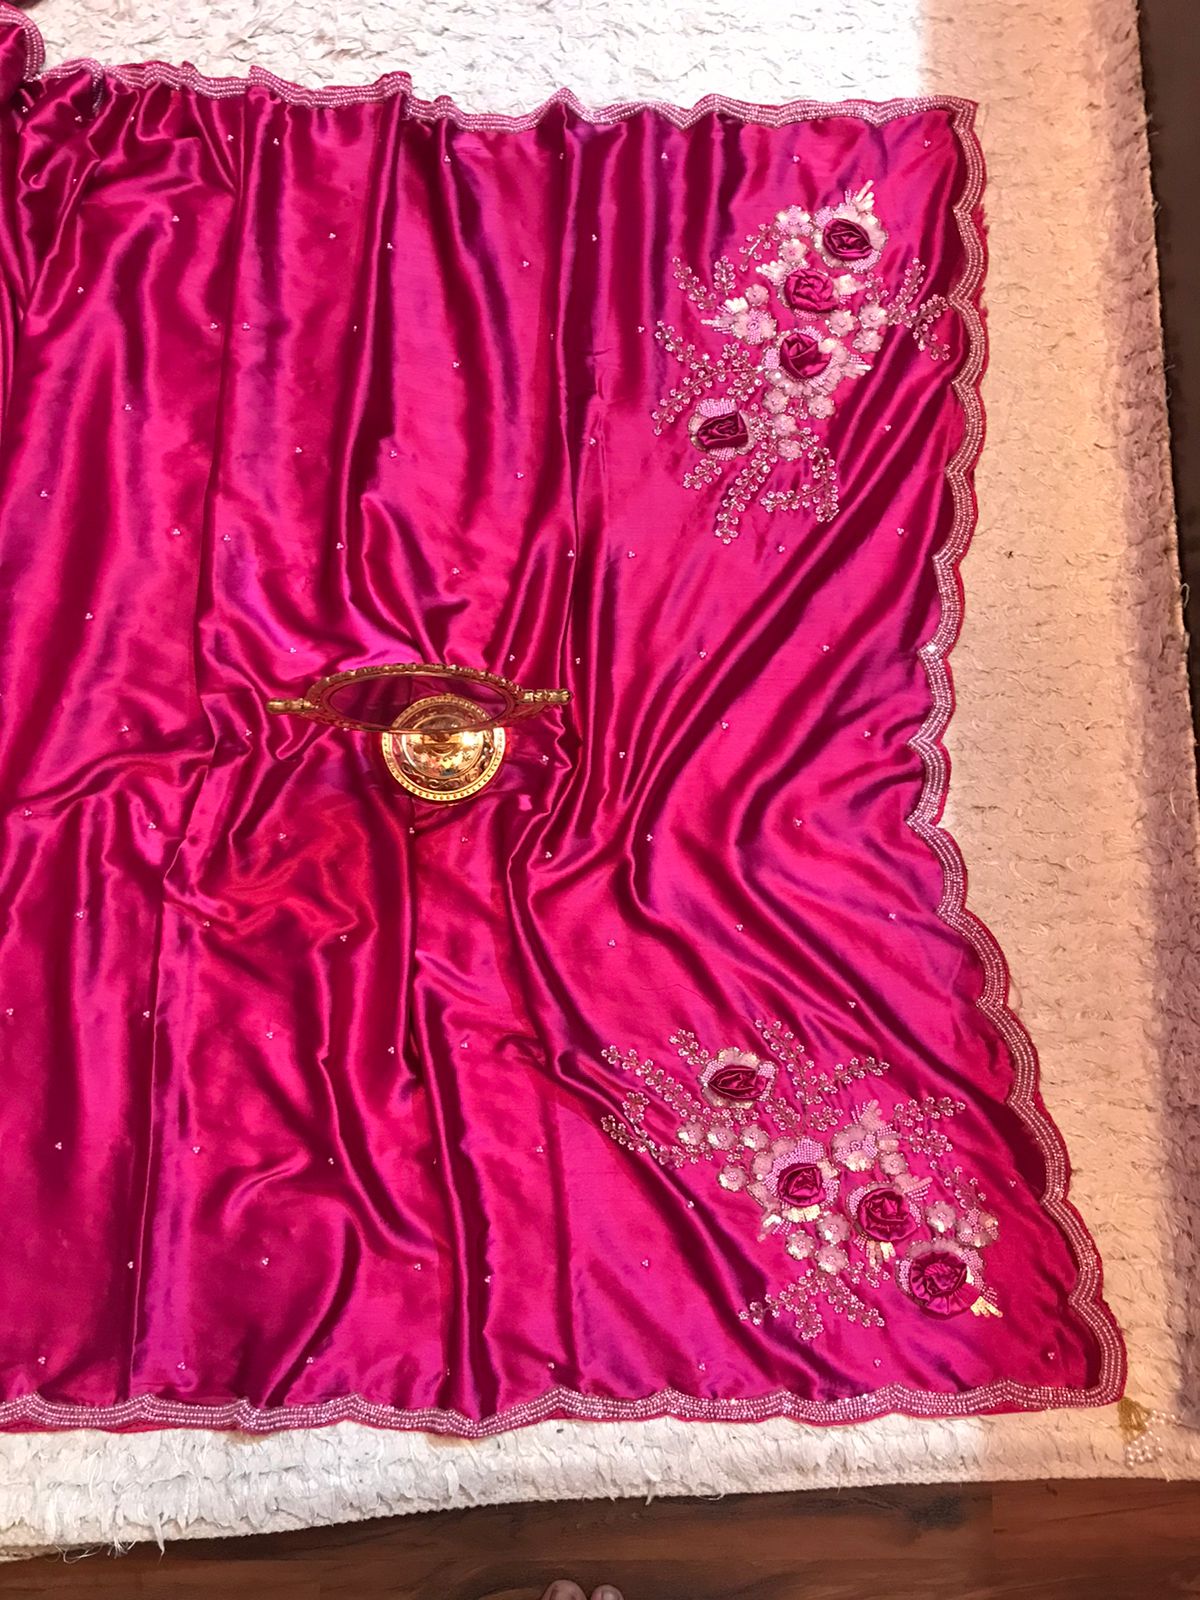 Premium pink satin silk luxury saree